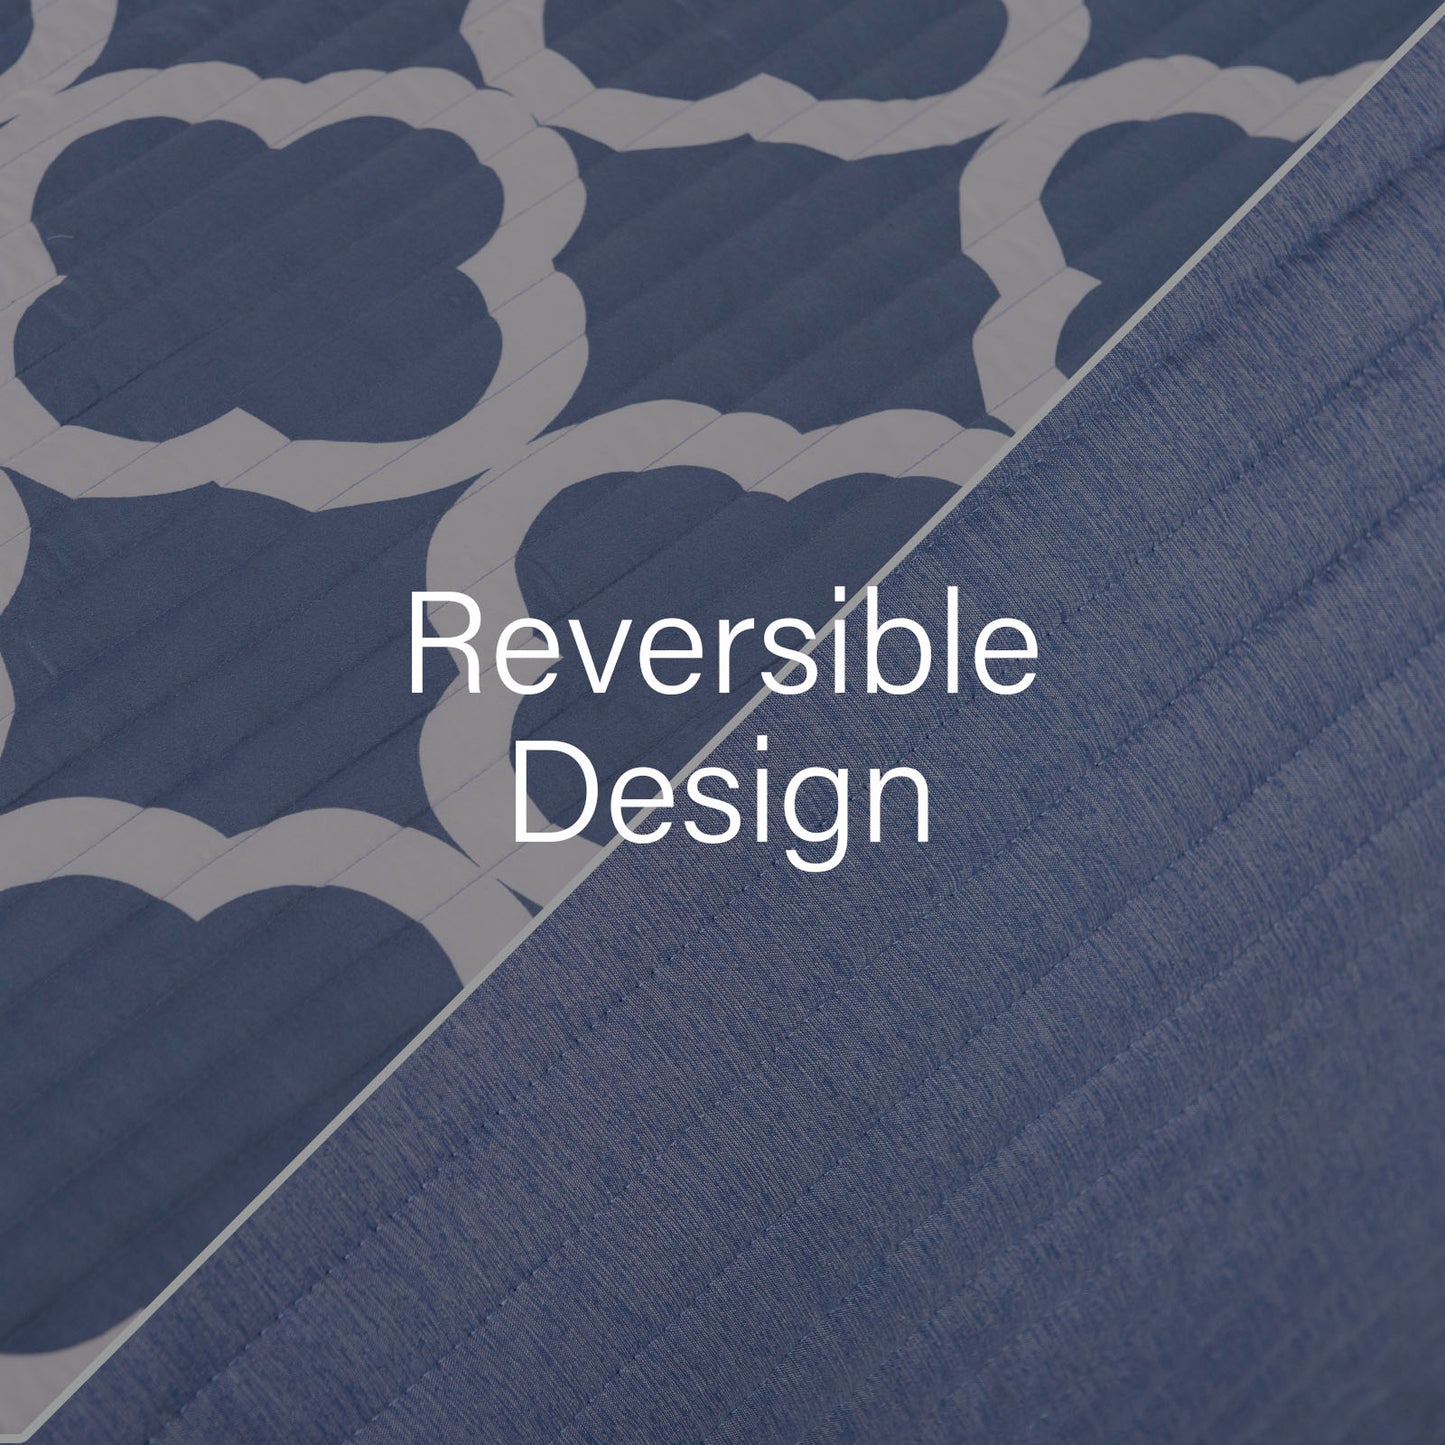 Royal Comfort Bamboo Cooling Reversible 7 Piece Comforter Set Bedspread - King - Royal Blue - BM House & Garden